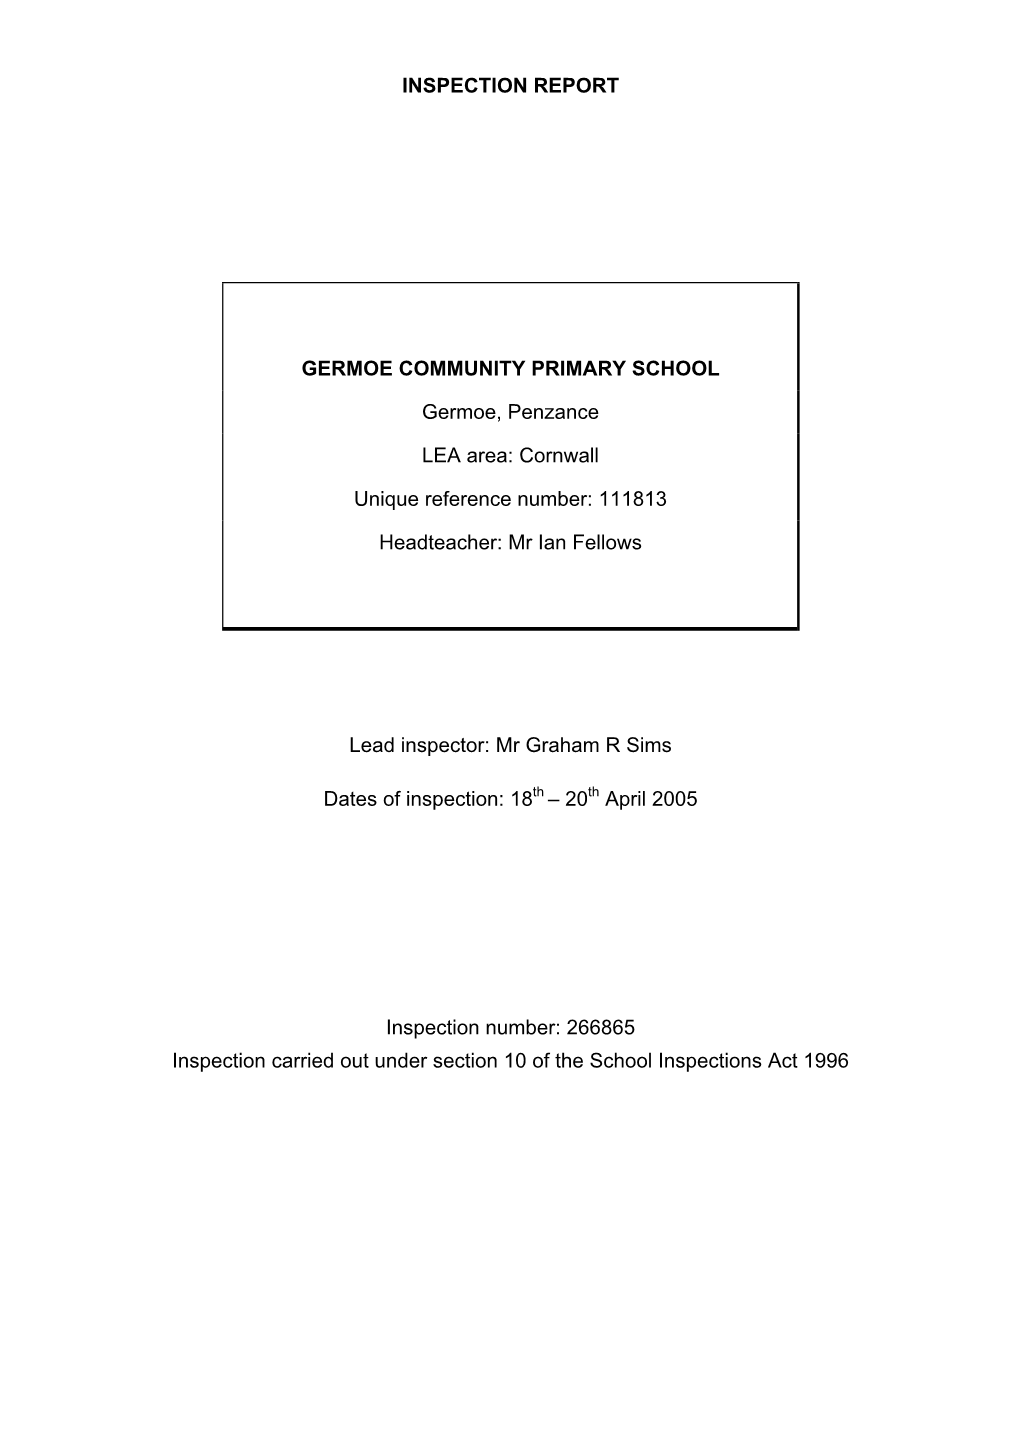 Inspection Report Germoe Community Primary School